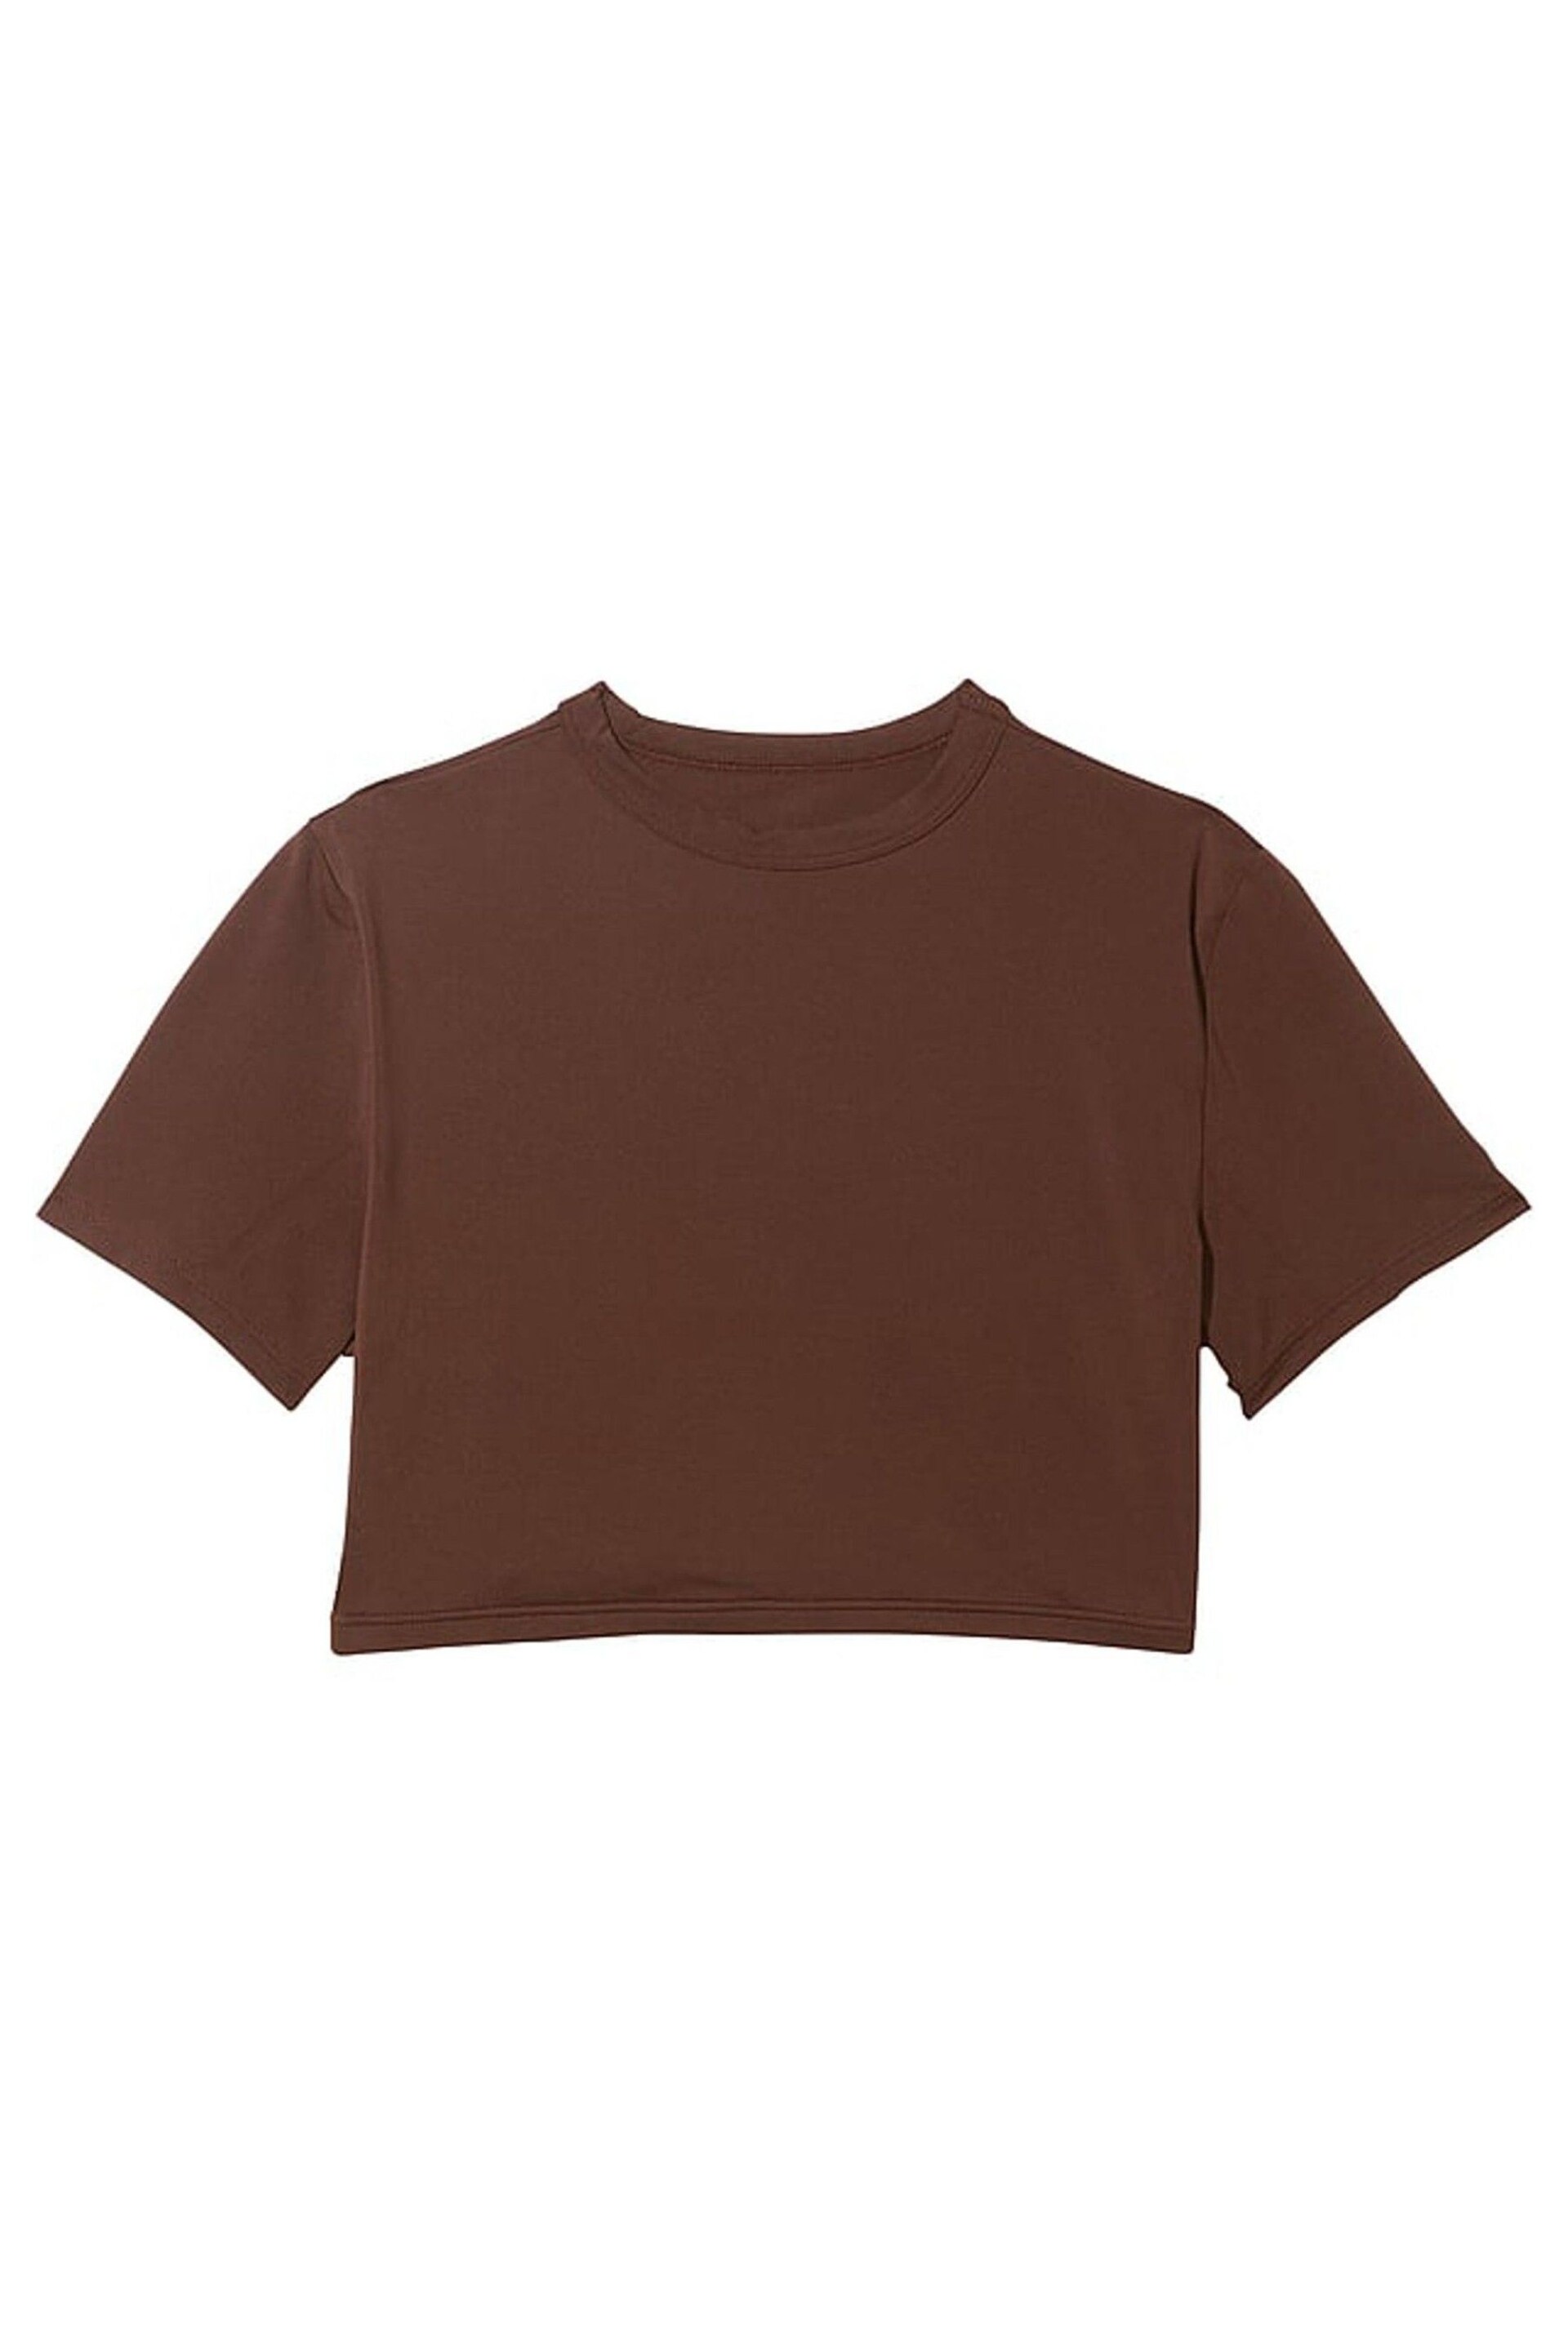 Victoria's Secret PINK Dark Brown Soft Stretch Cropped T-Shirt - Image 3 of 3